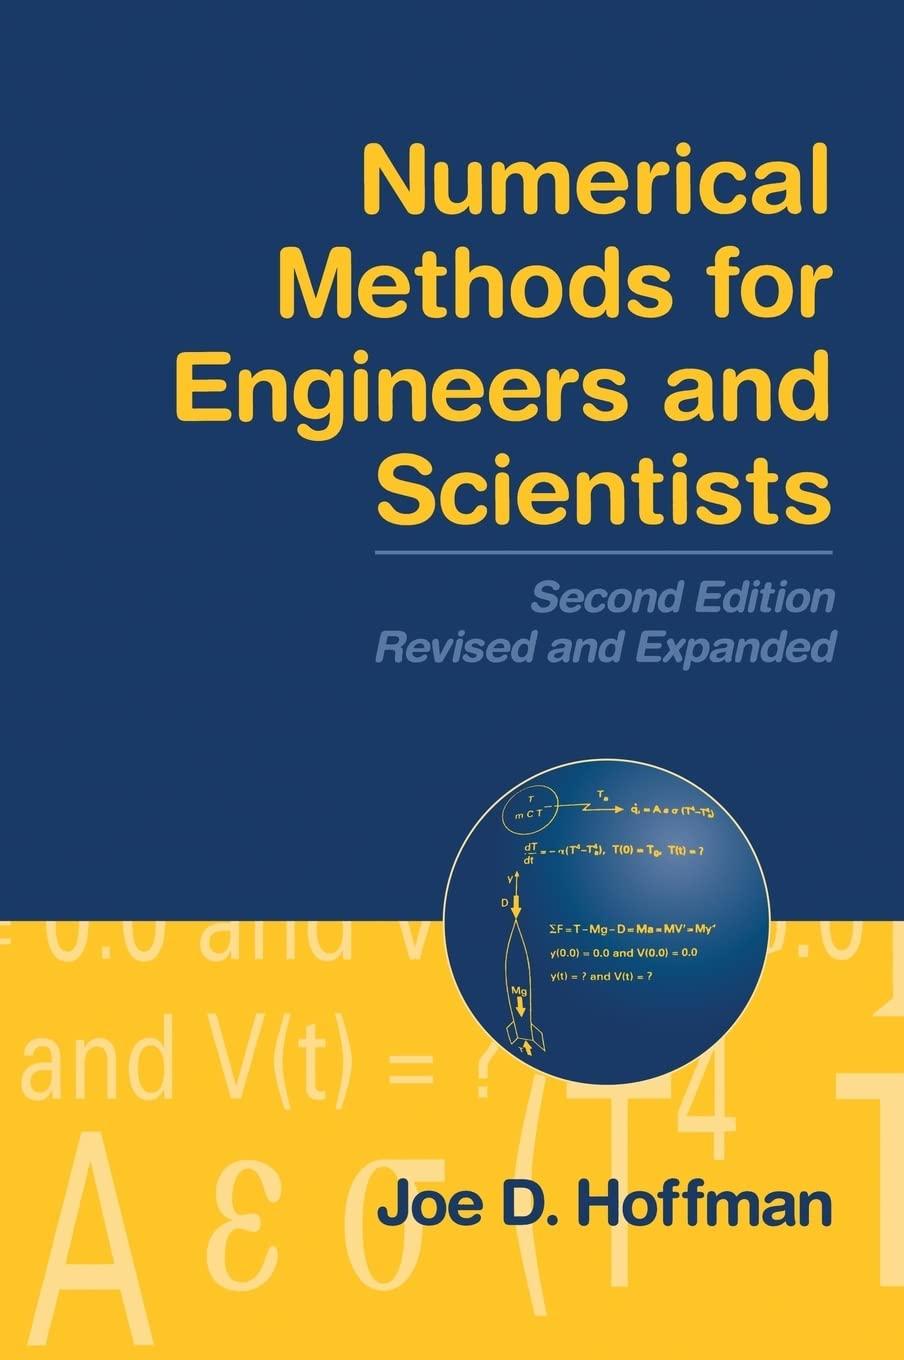 numerical methods for engineers and scientists 2nd edition joe d. hoffman, steven frankel 0824704436,